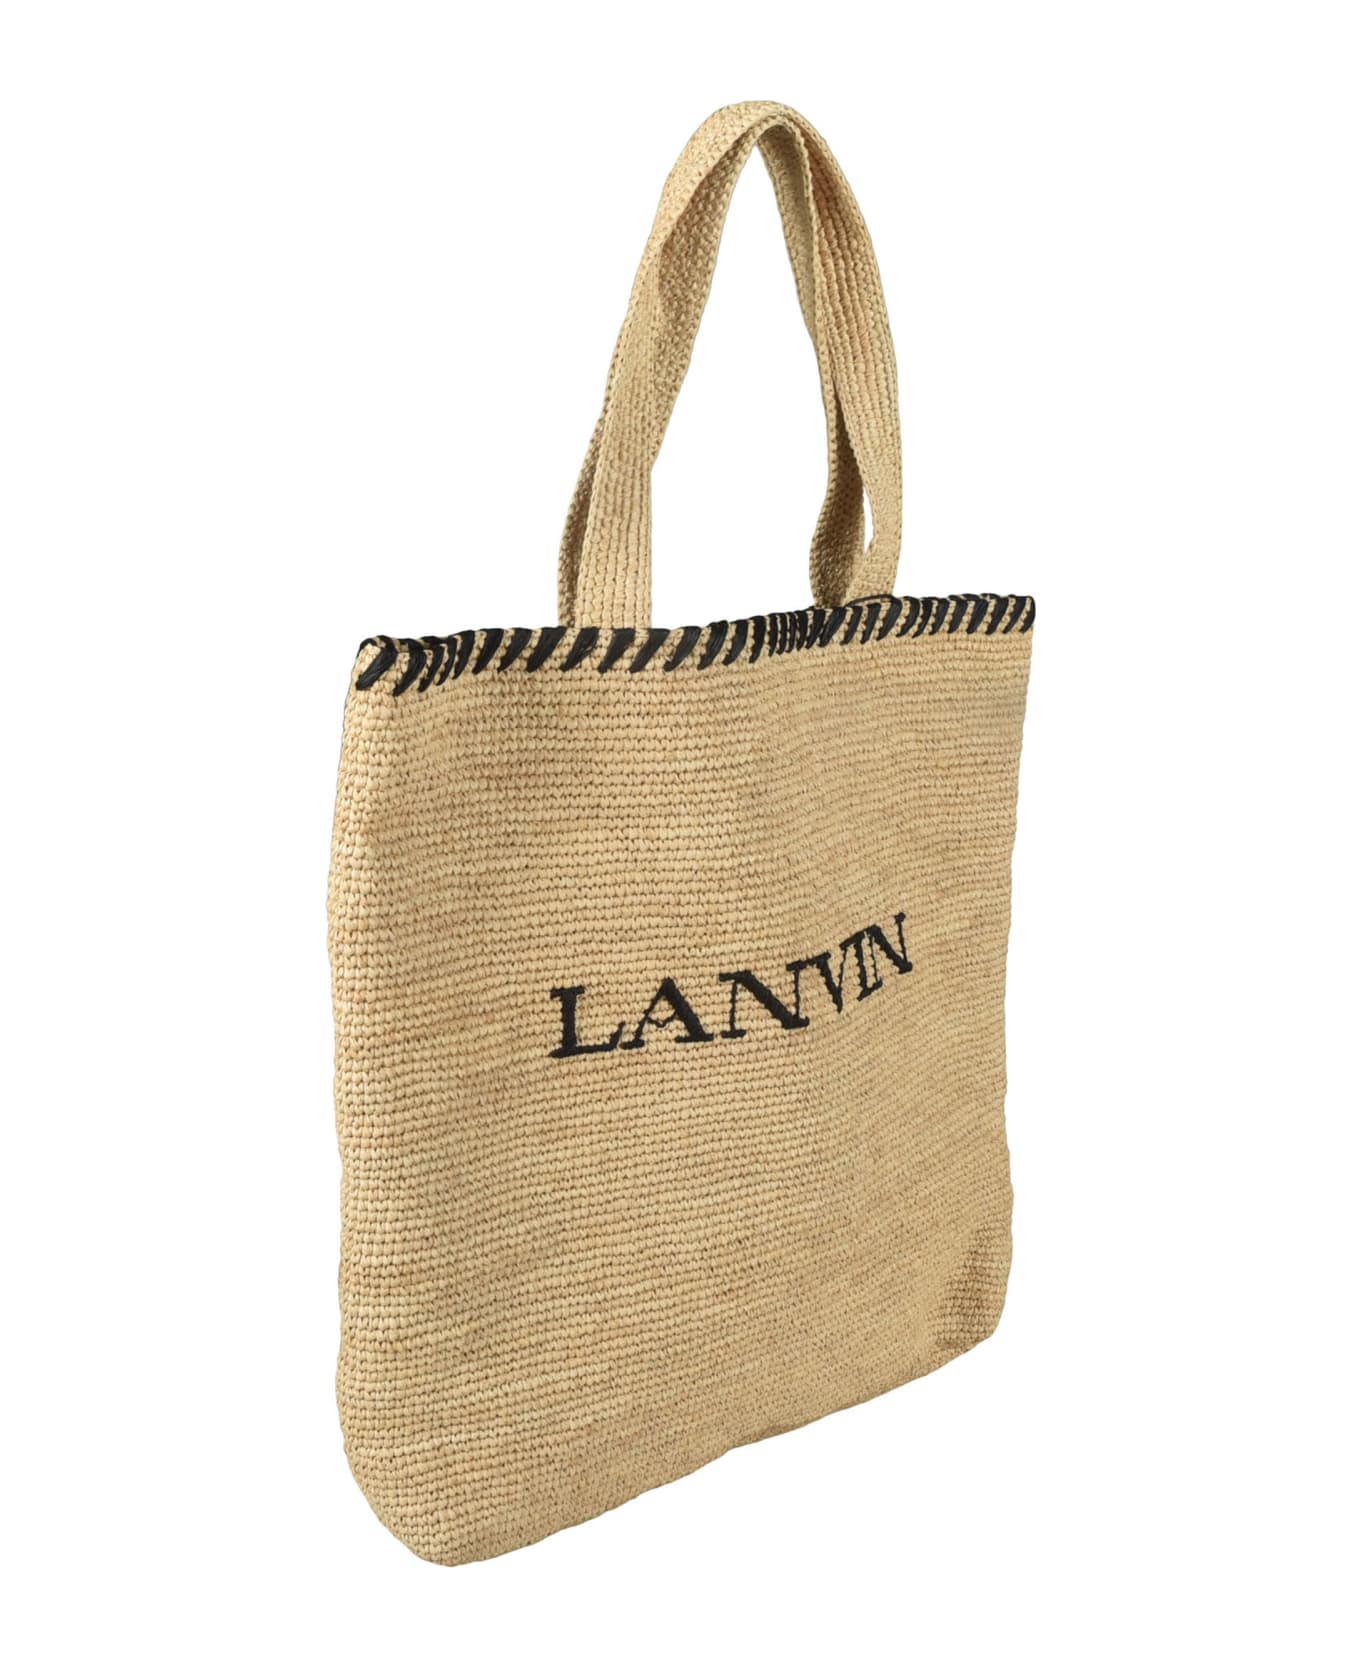 Lanvin Logo Shopping Bag - Black